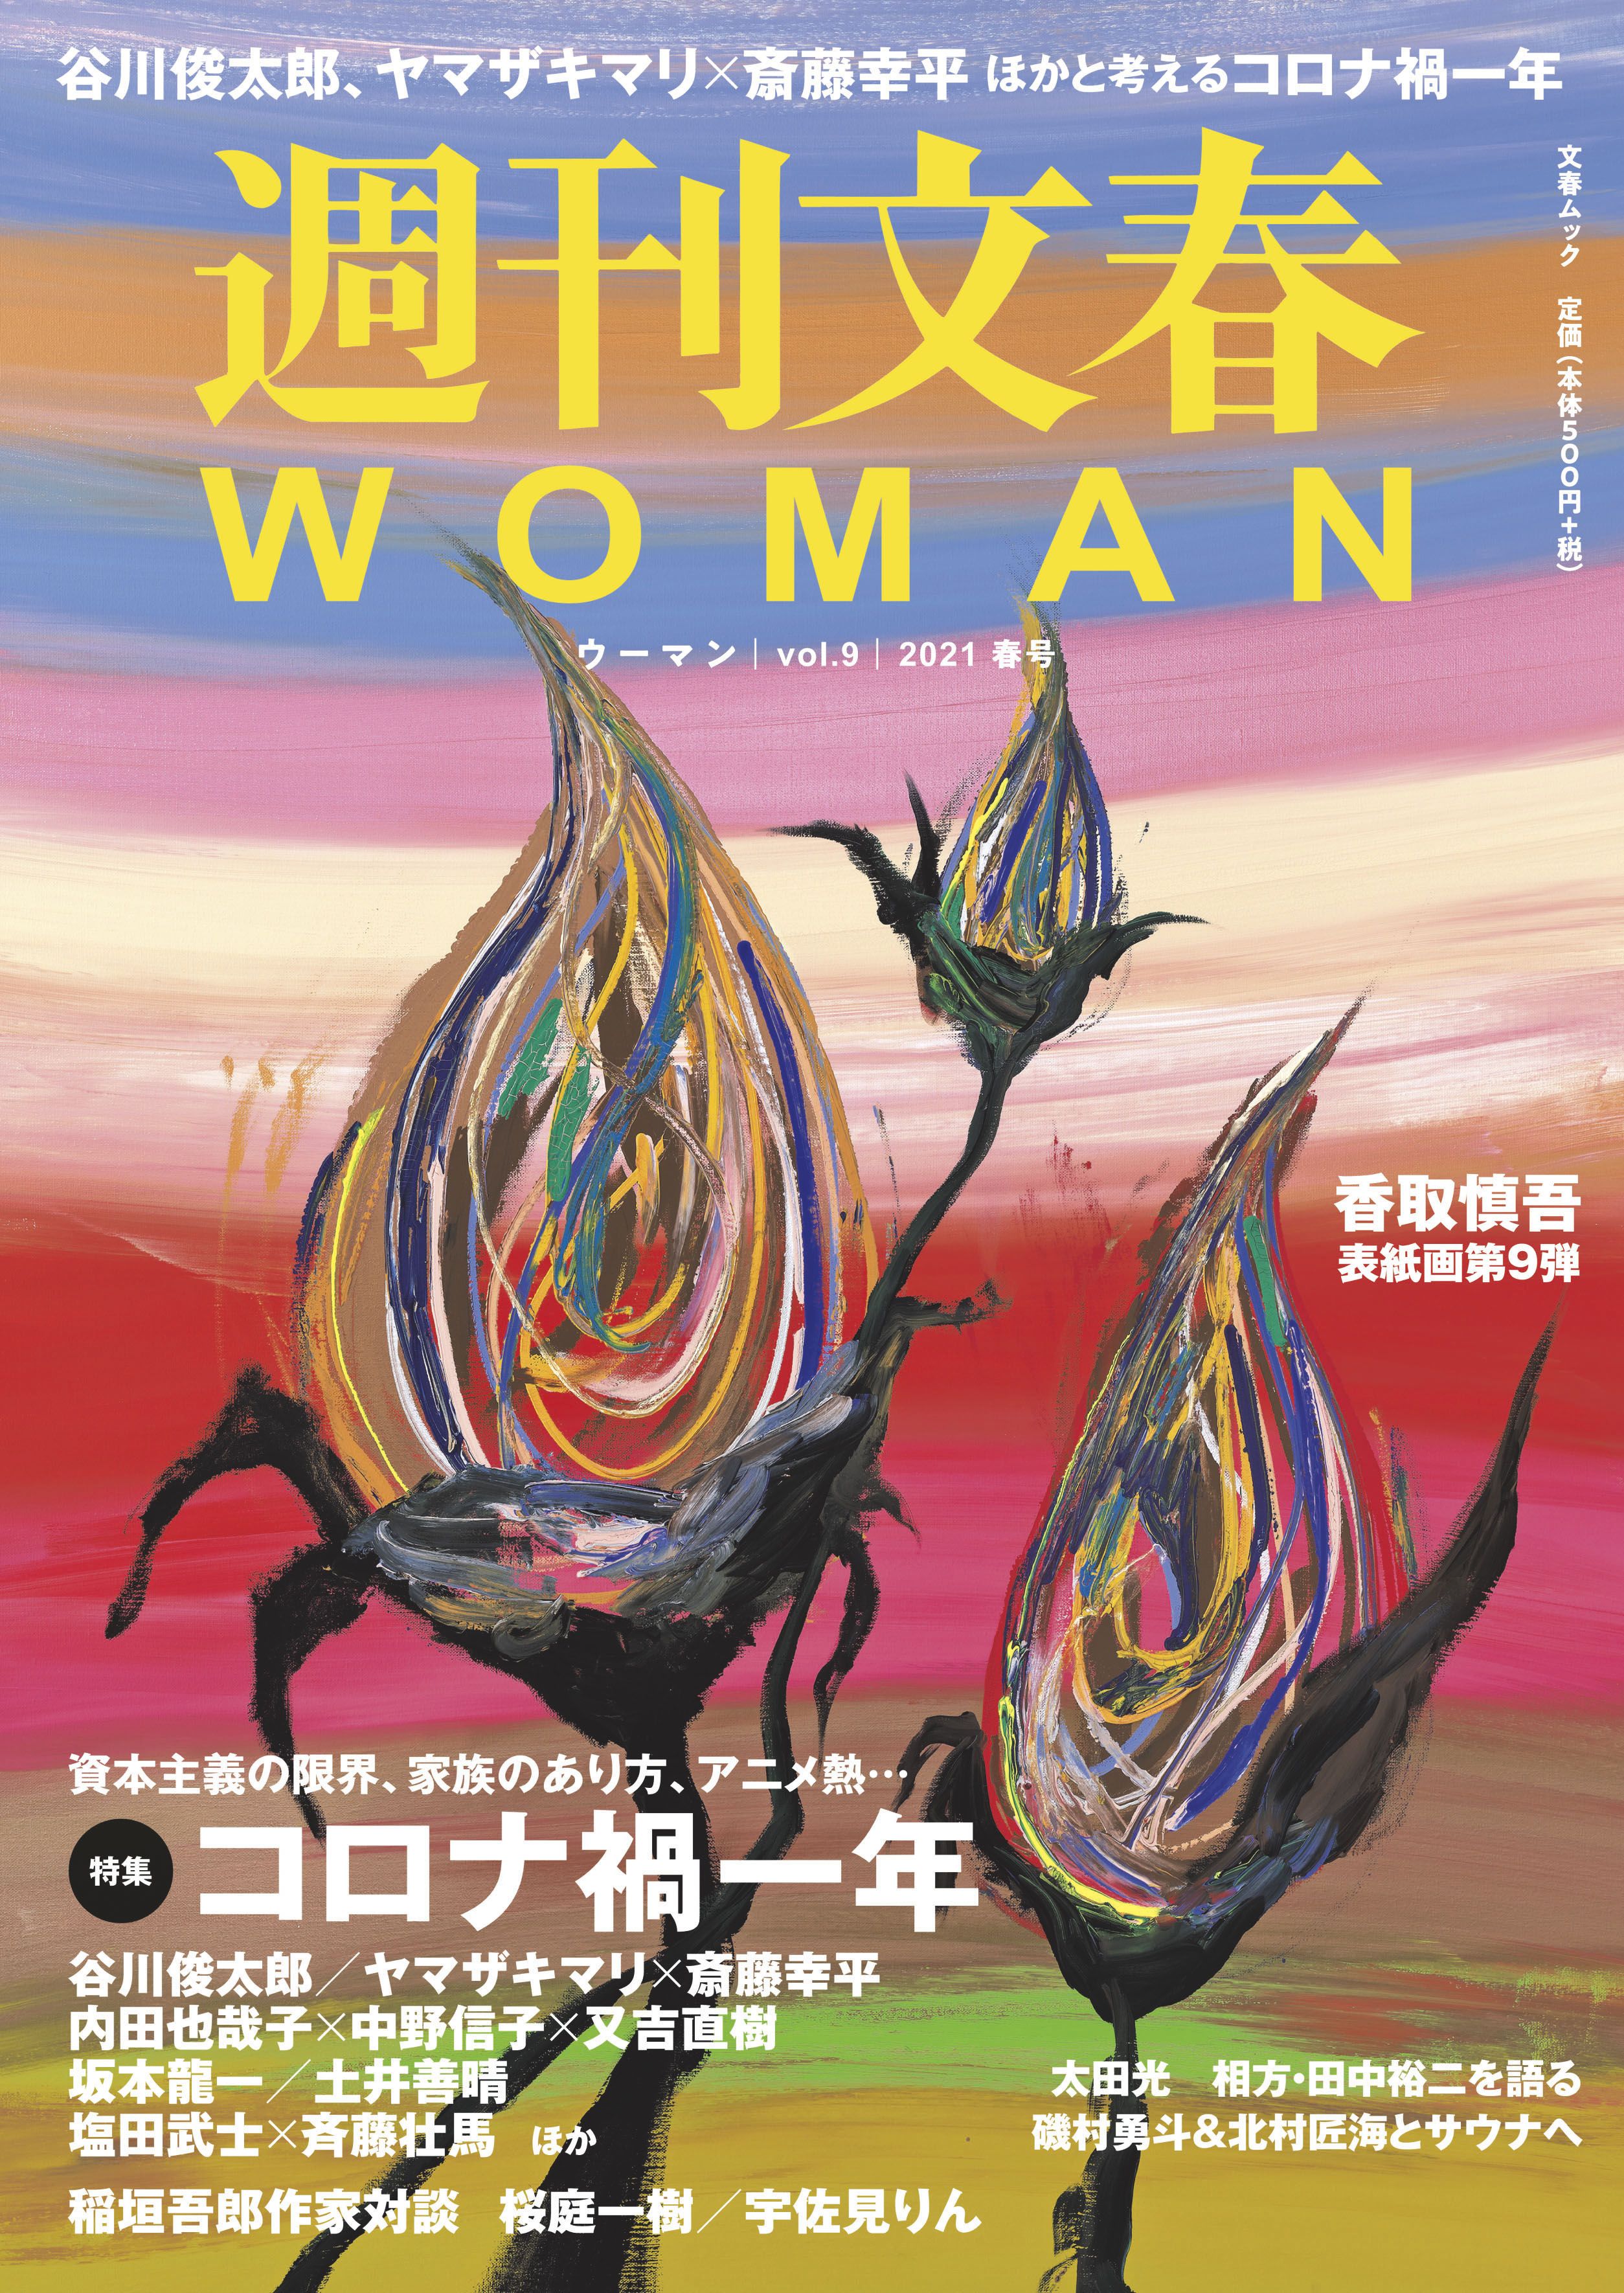 発売中の週刊文春WOMAN vol.9 (2021年 春号)に掲載